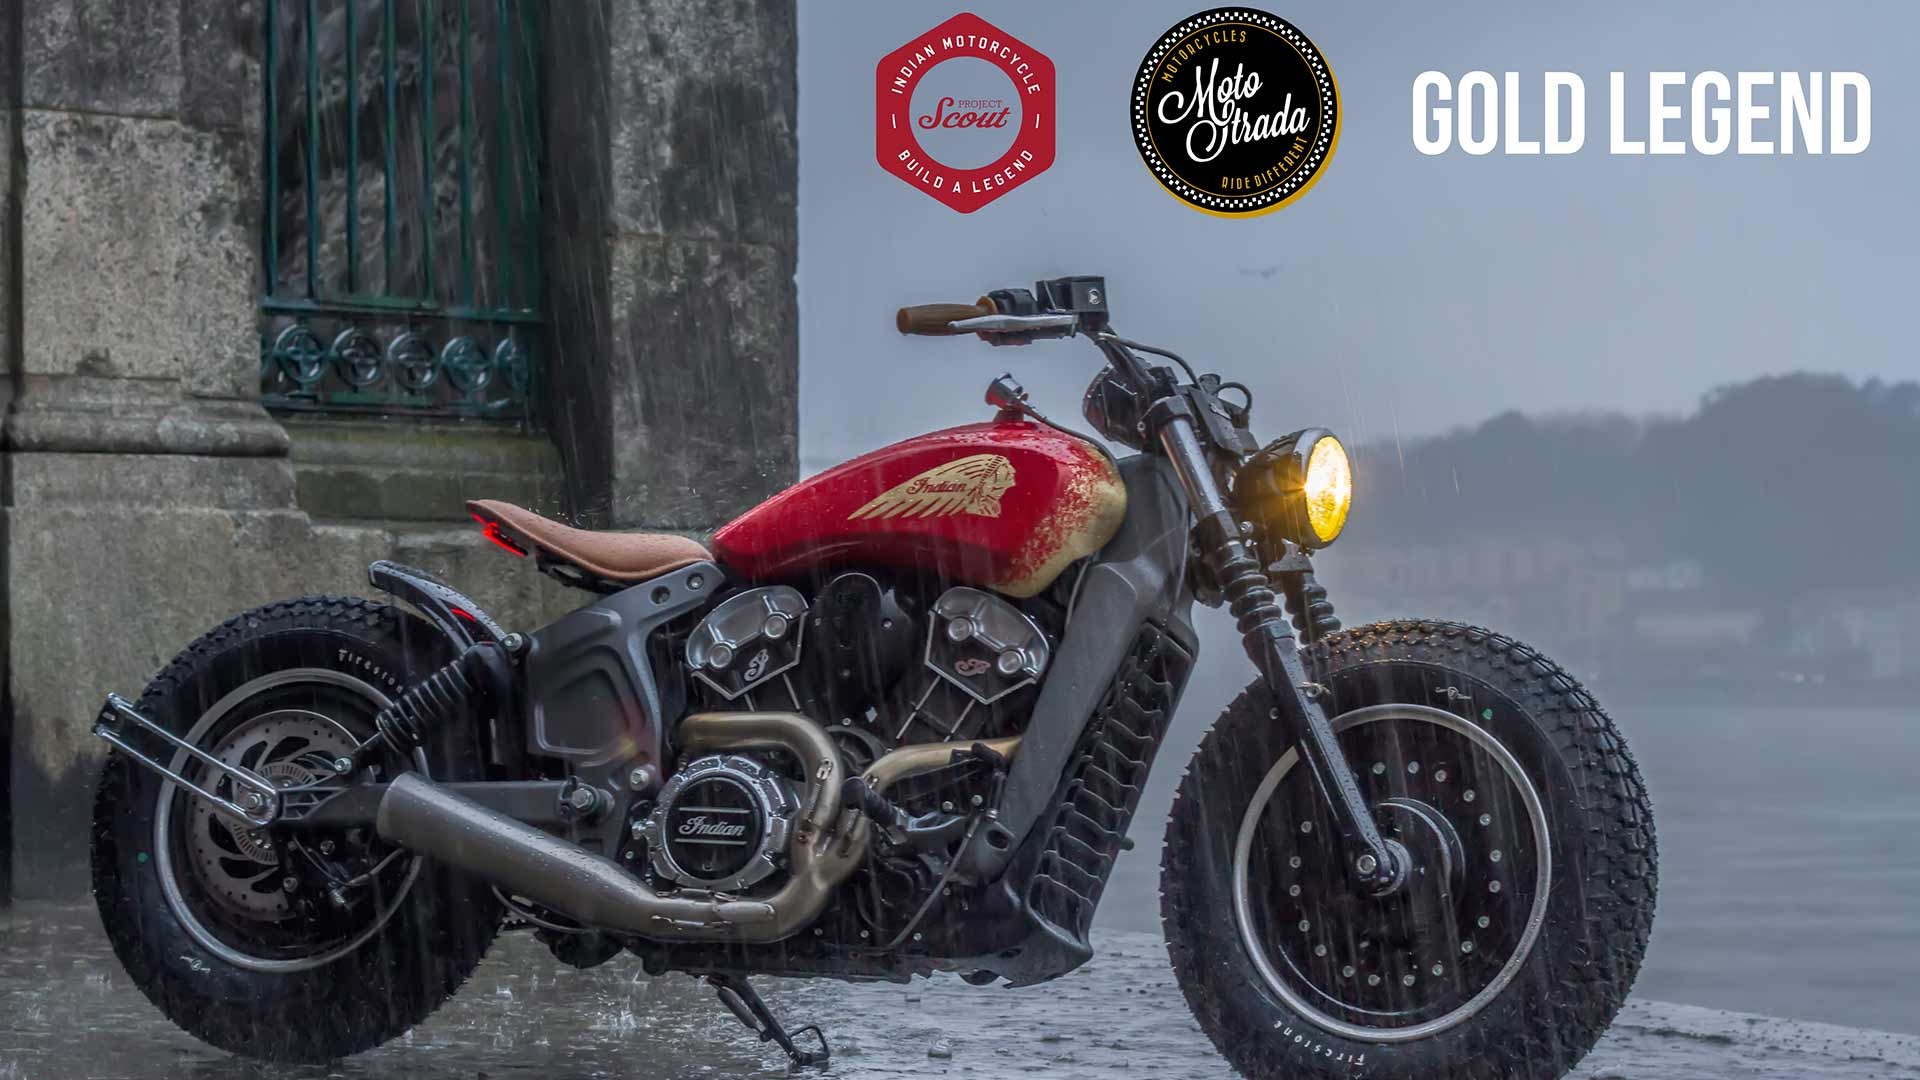 71+] Indian Motorcycle Wallpaper - WallpaperSafari